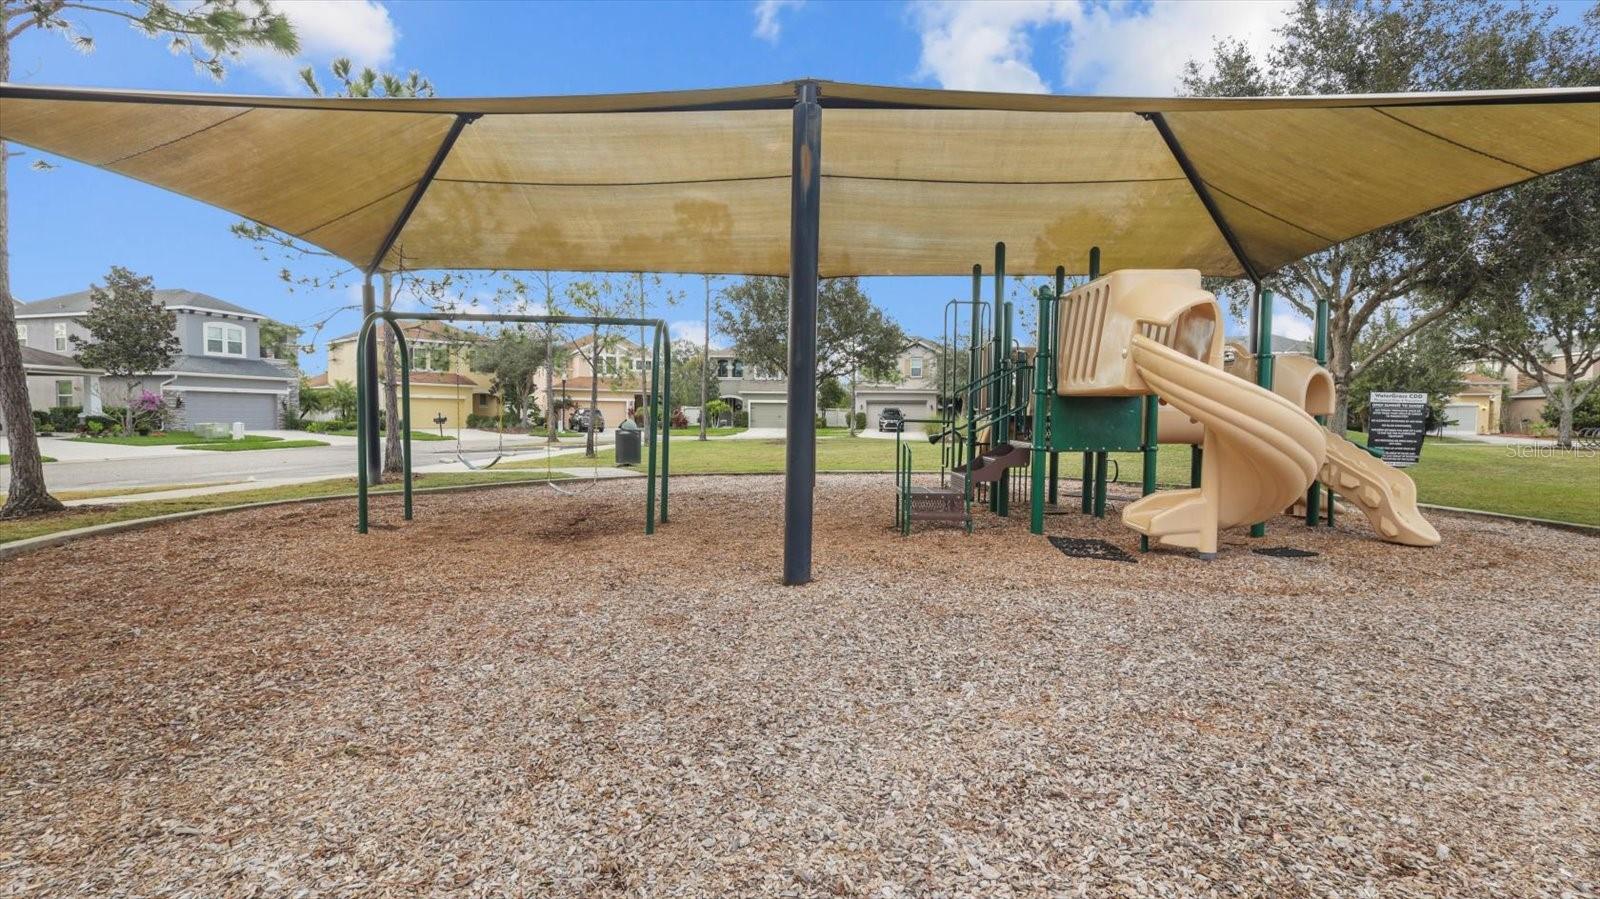 Canopy playground